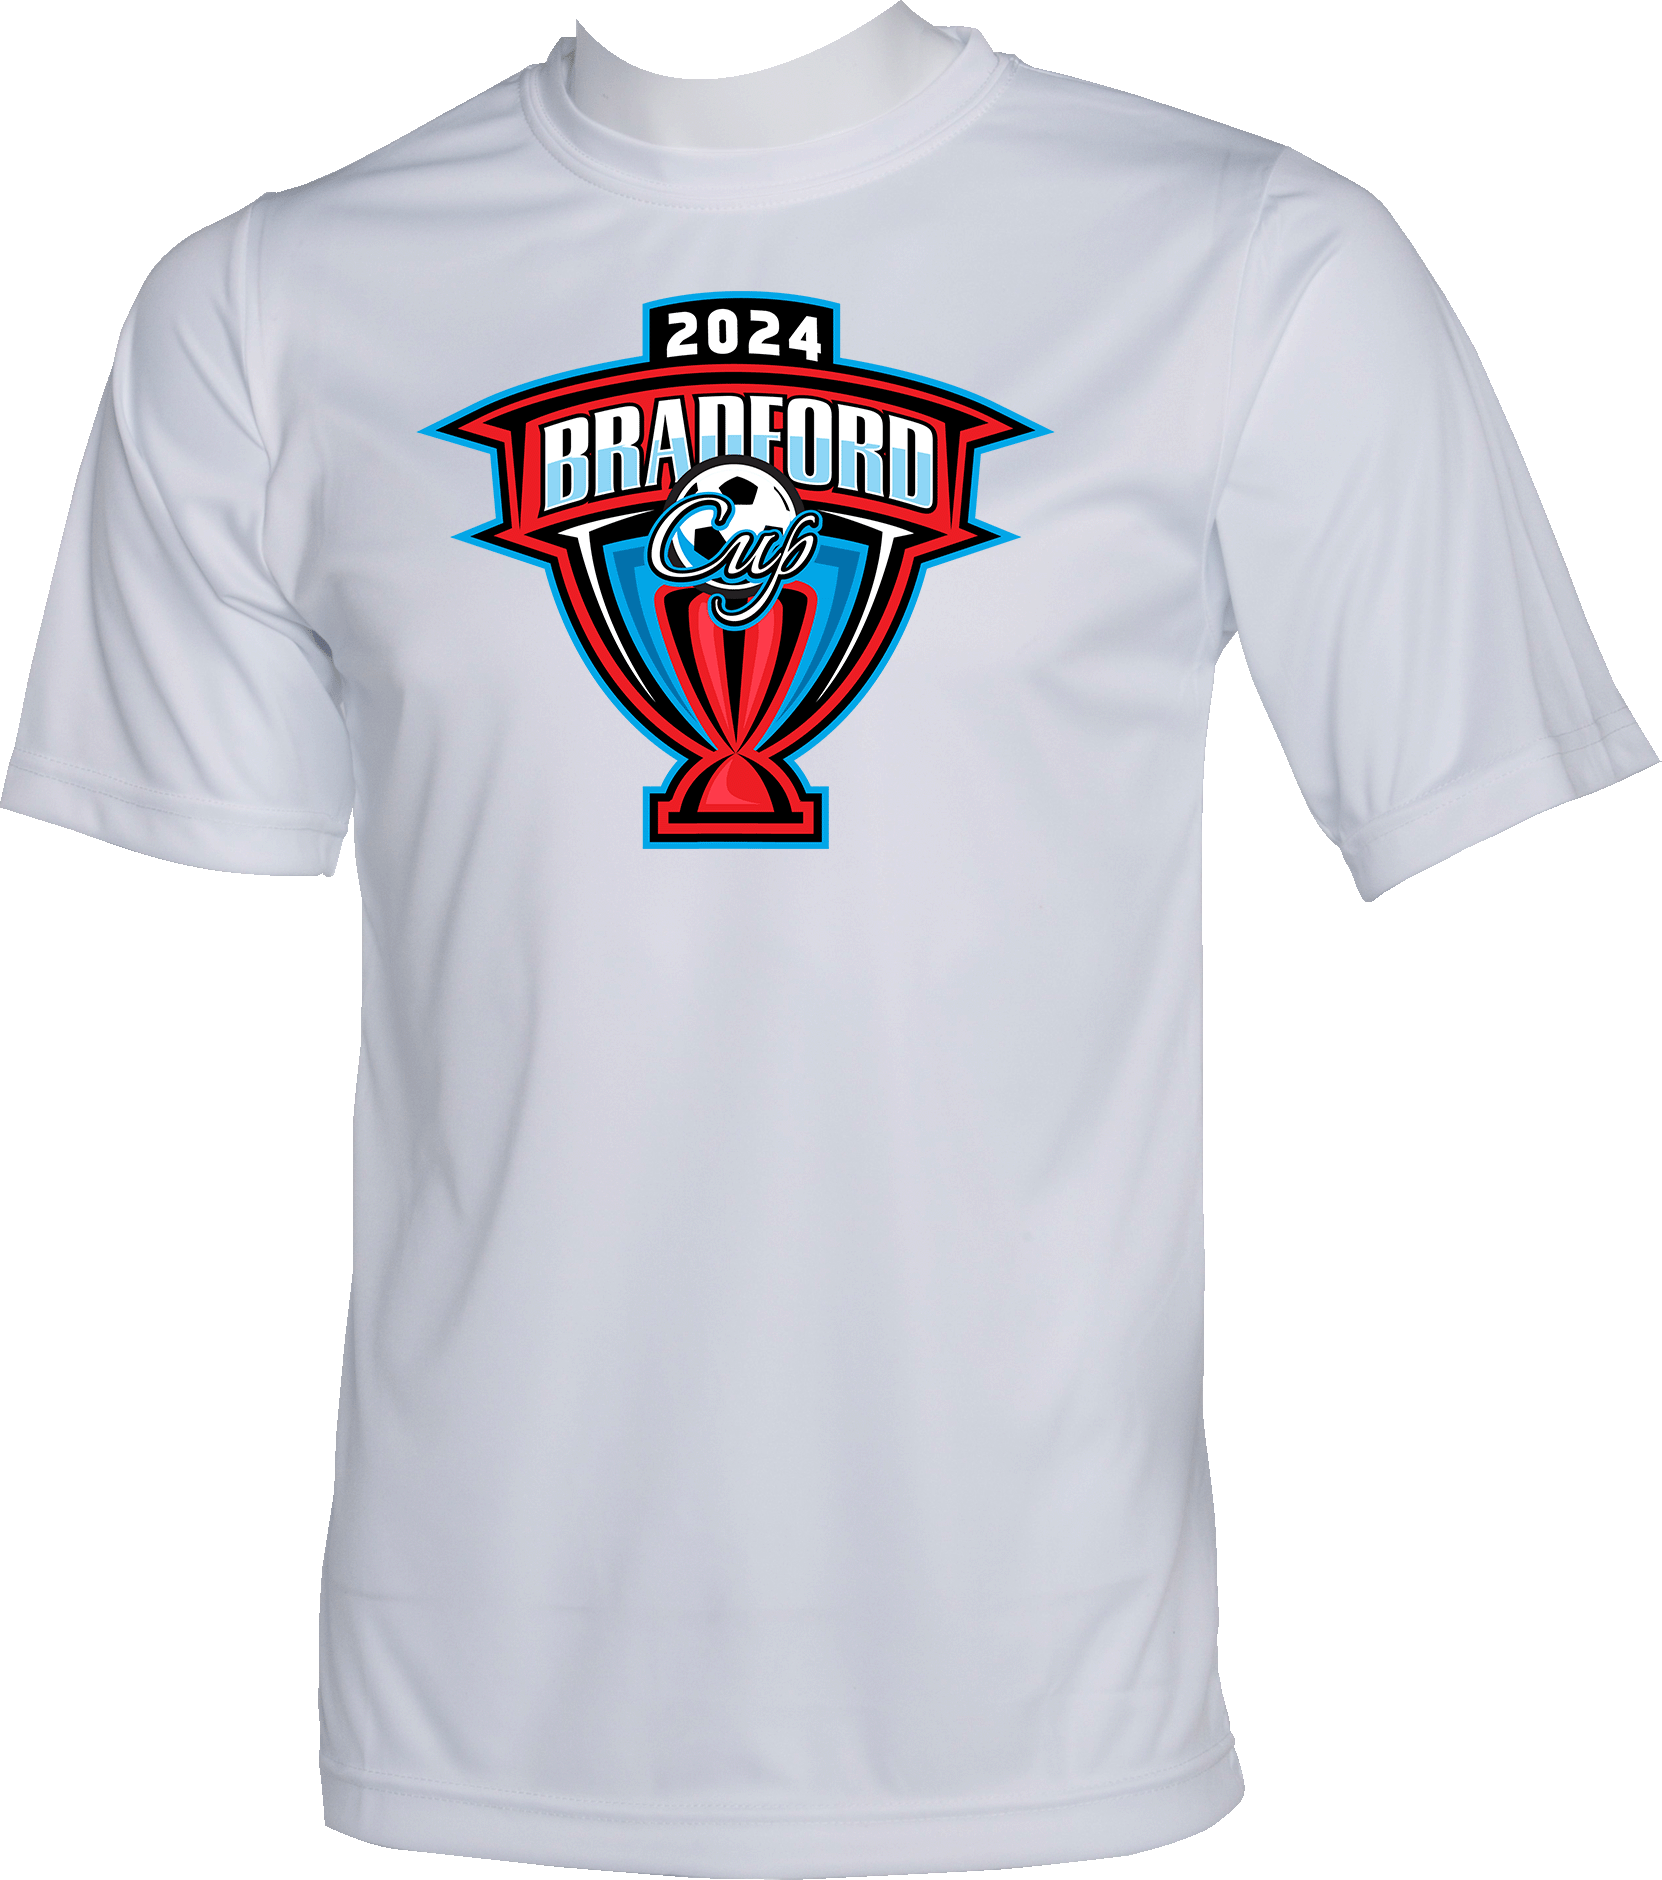 Performance Shirts - 2024 Bradford Cup